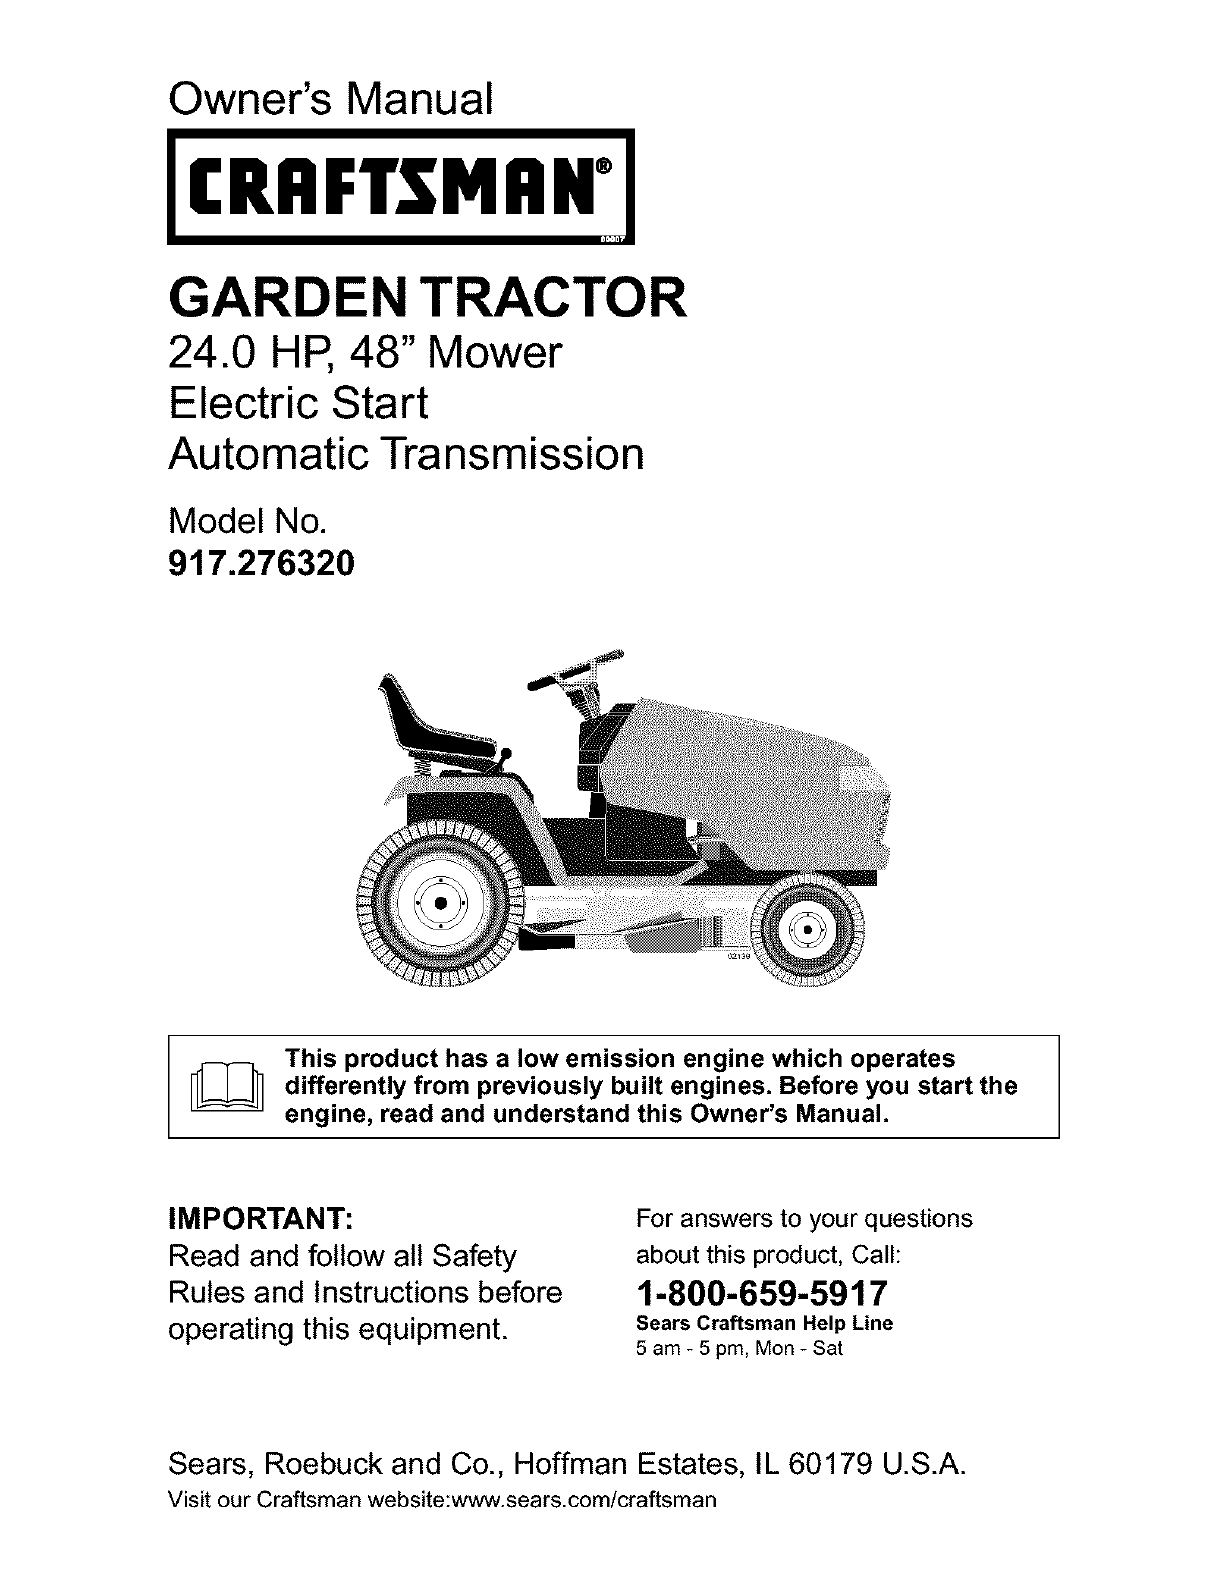 Craftsman 917.27632 Lawn Mower User Manual